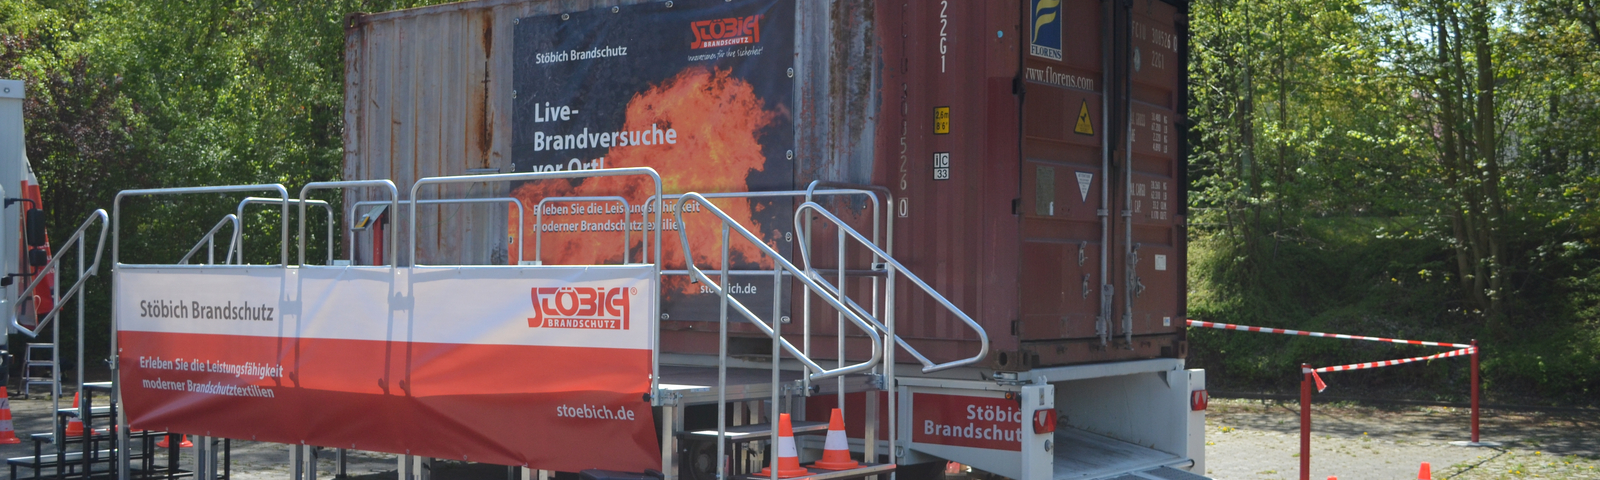 Live-brandproeven in Goslar